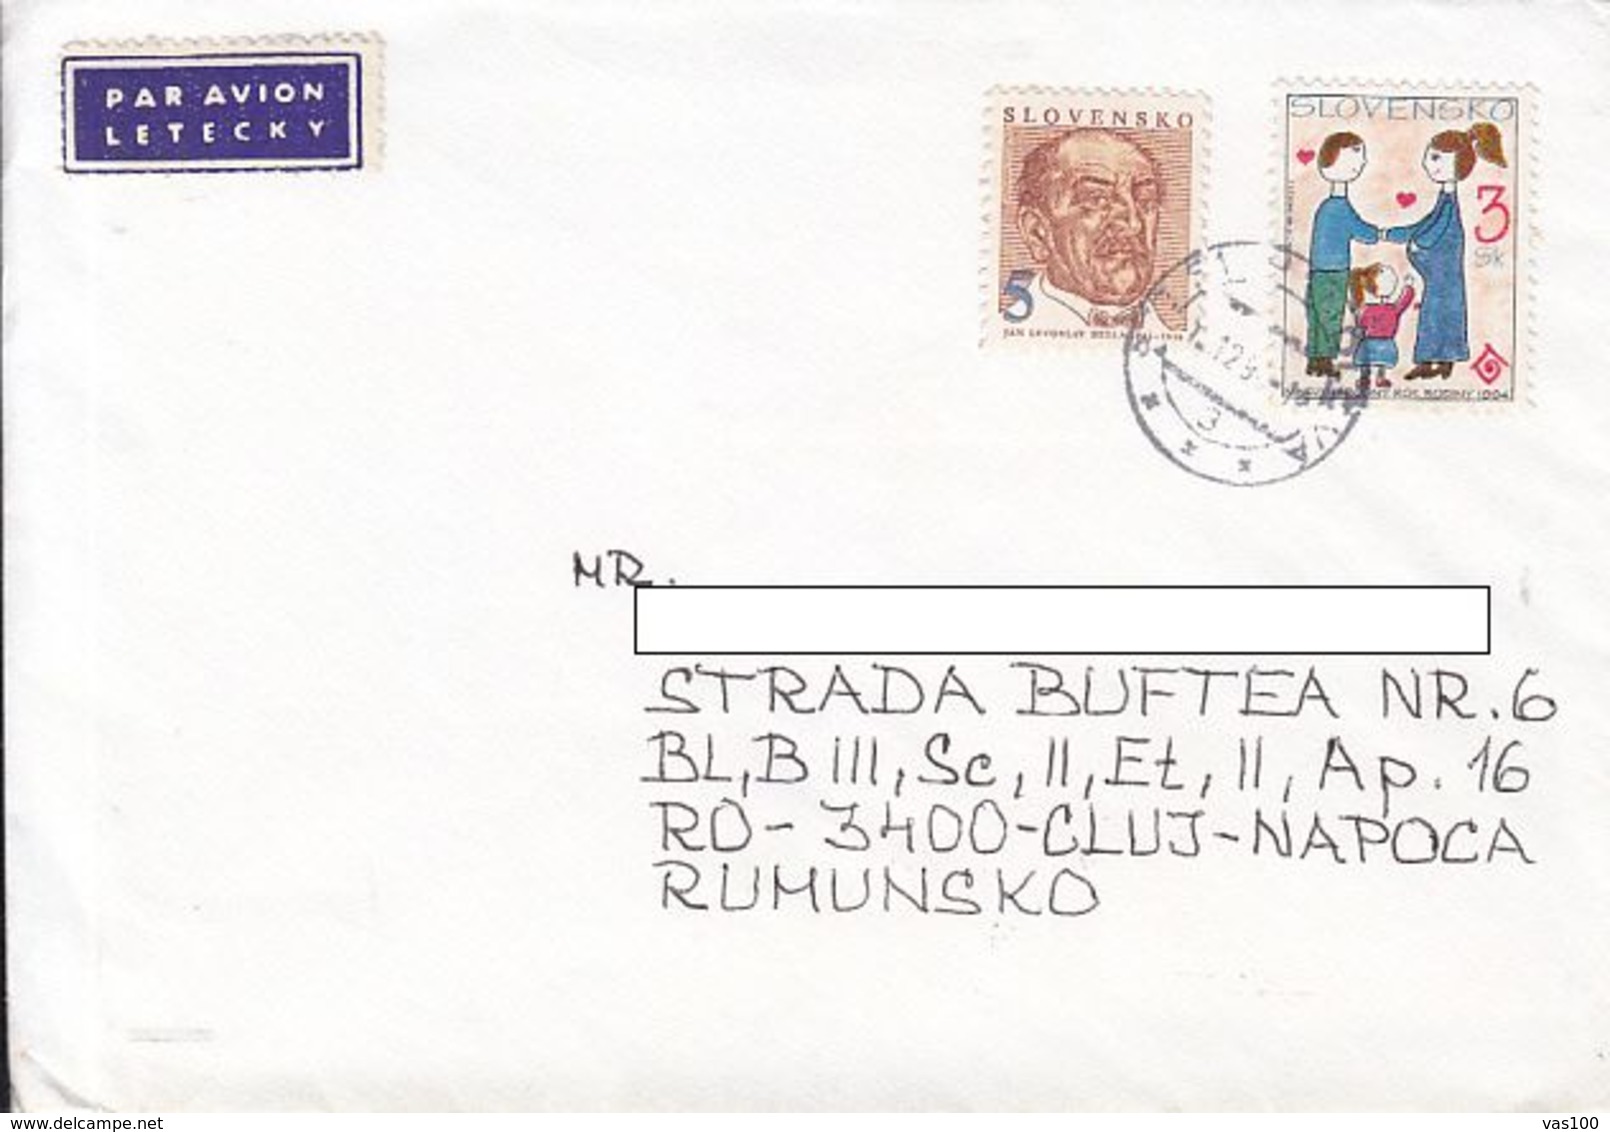 JAN LEVOSLAV BELLA, FAMILY, STAMPS ON COVER, 1995, SLOVAKIA - Briefe U. Dokumente